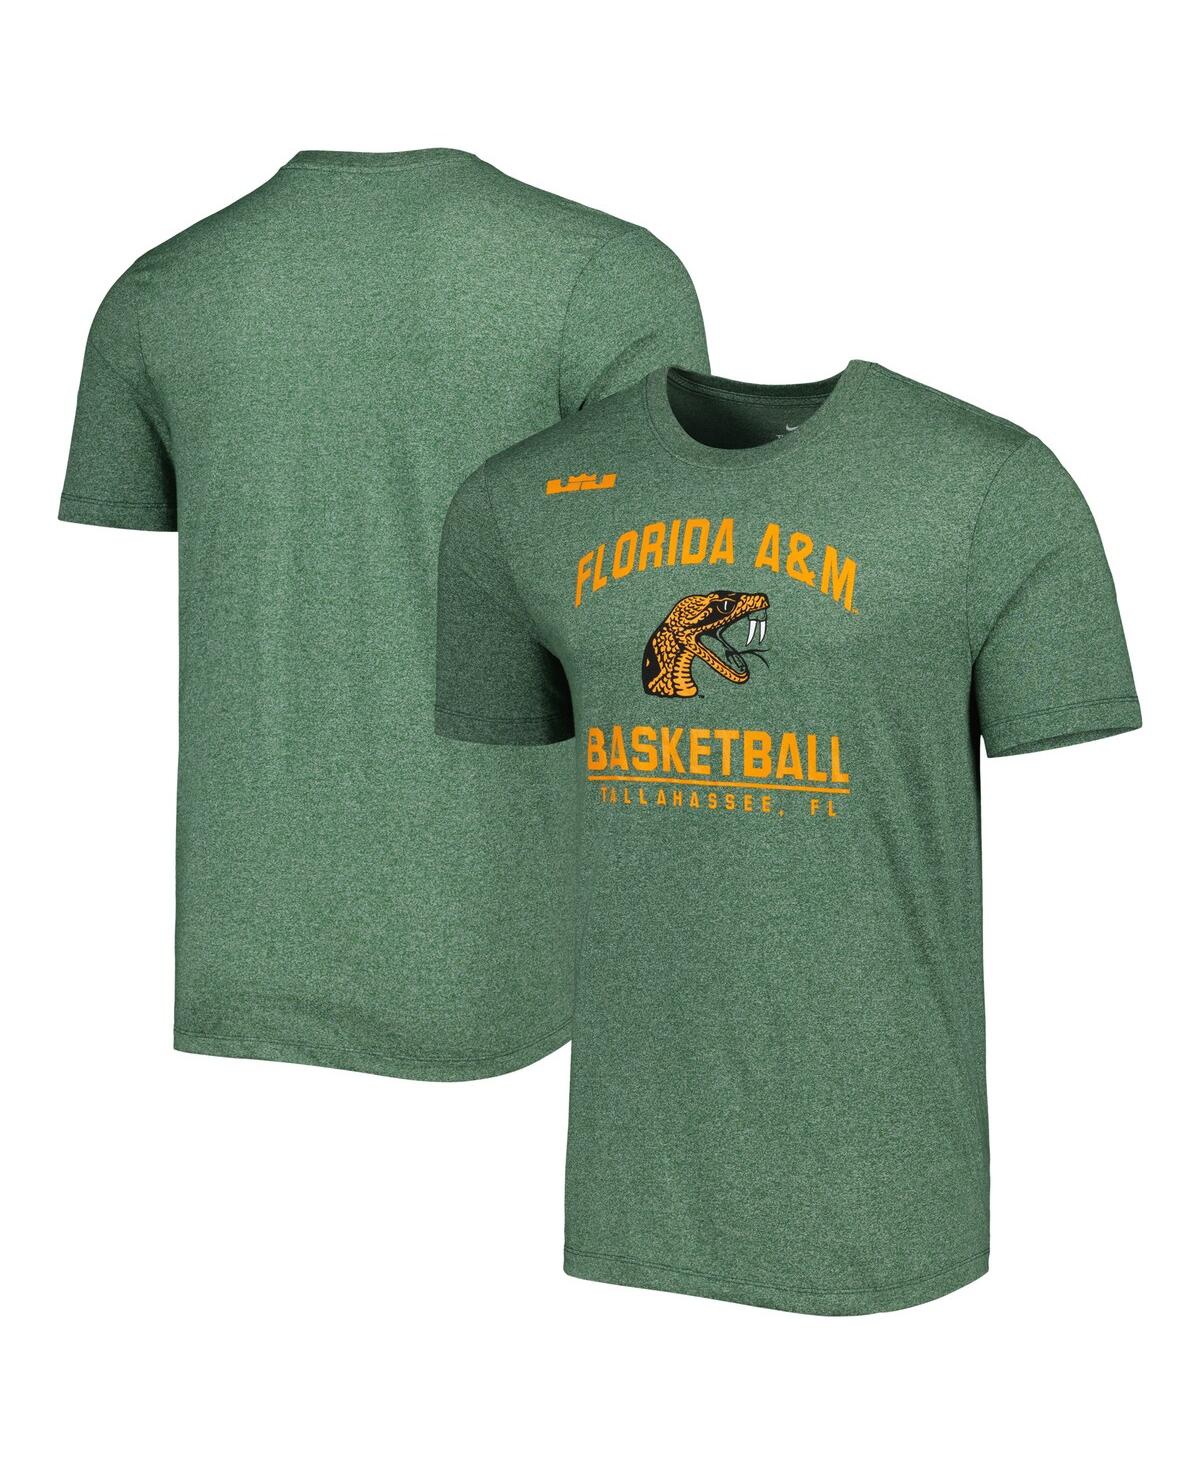 Lebron James Shirt design for purchase t-shirt design for sale